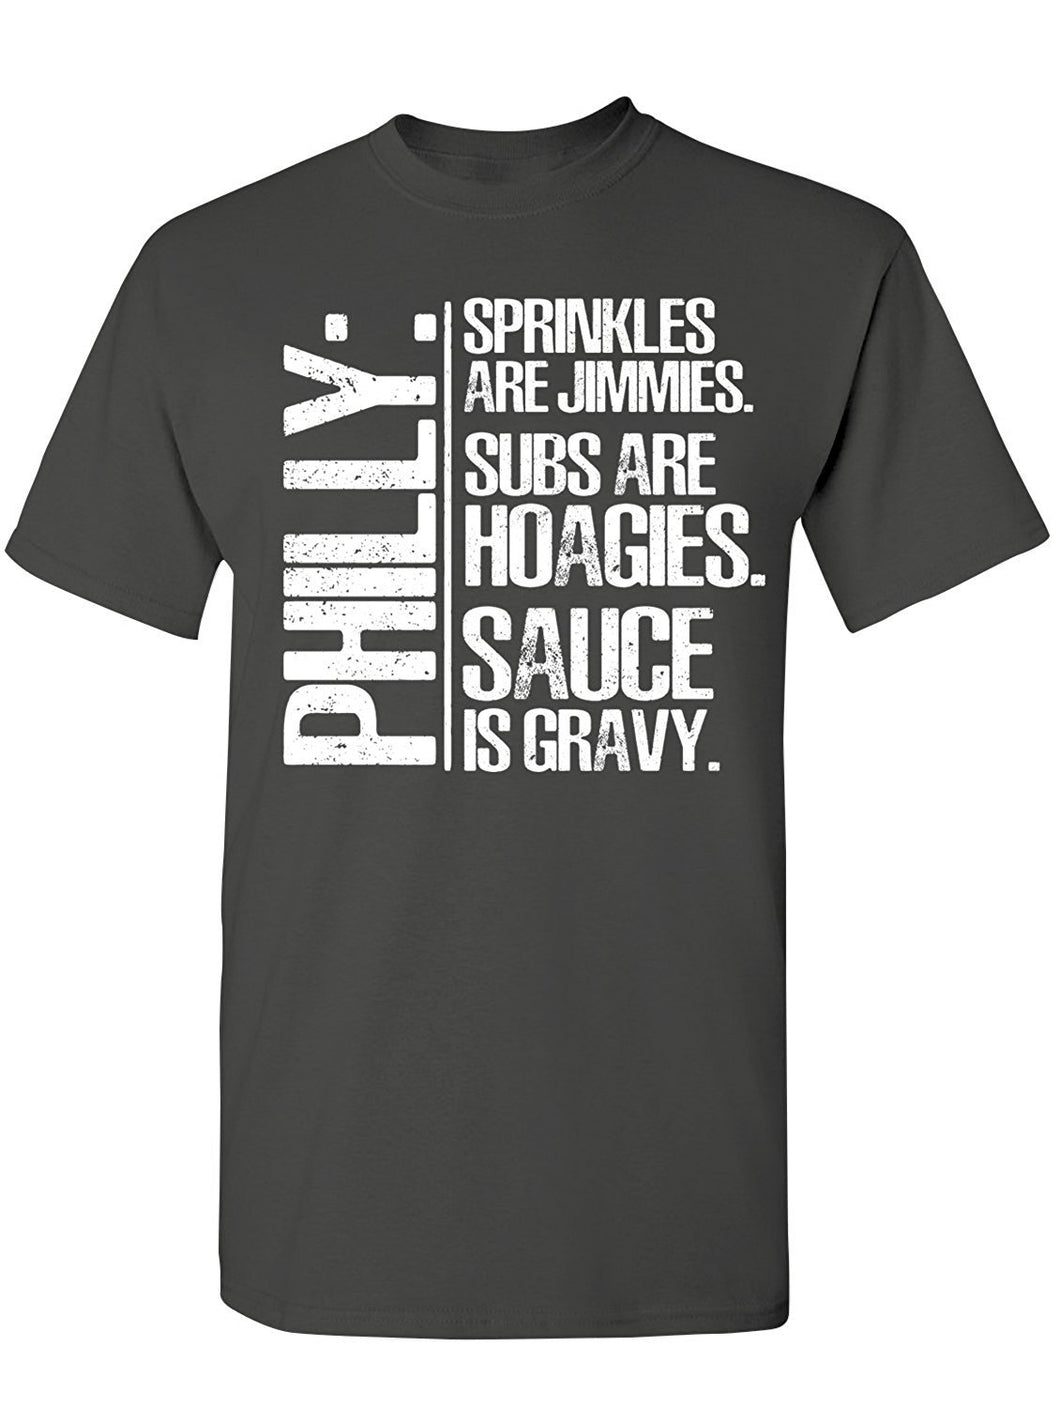 Manateez Men's Philly Slang Explained Tee Shirt